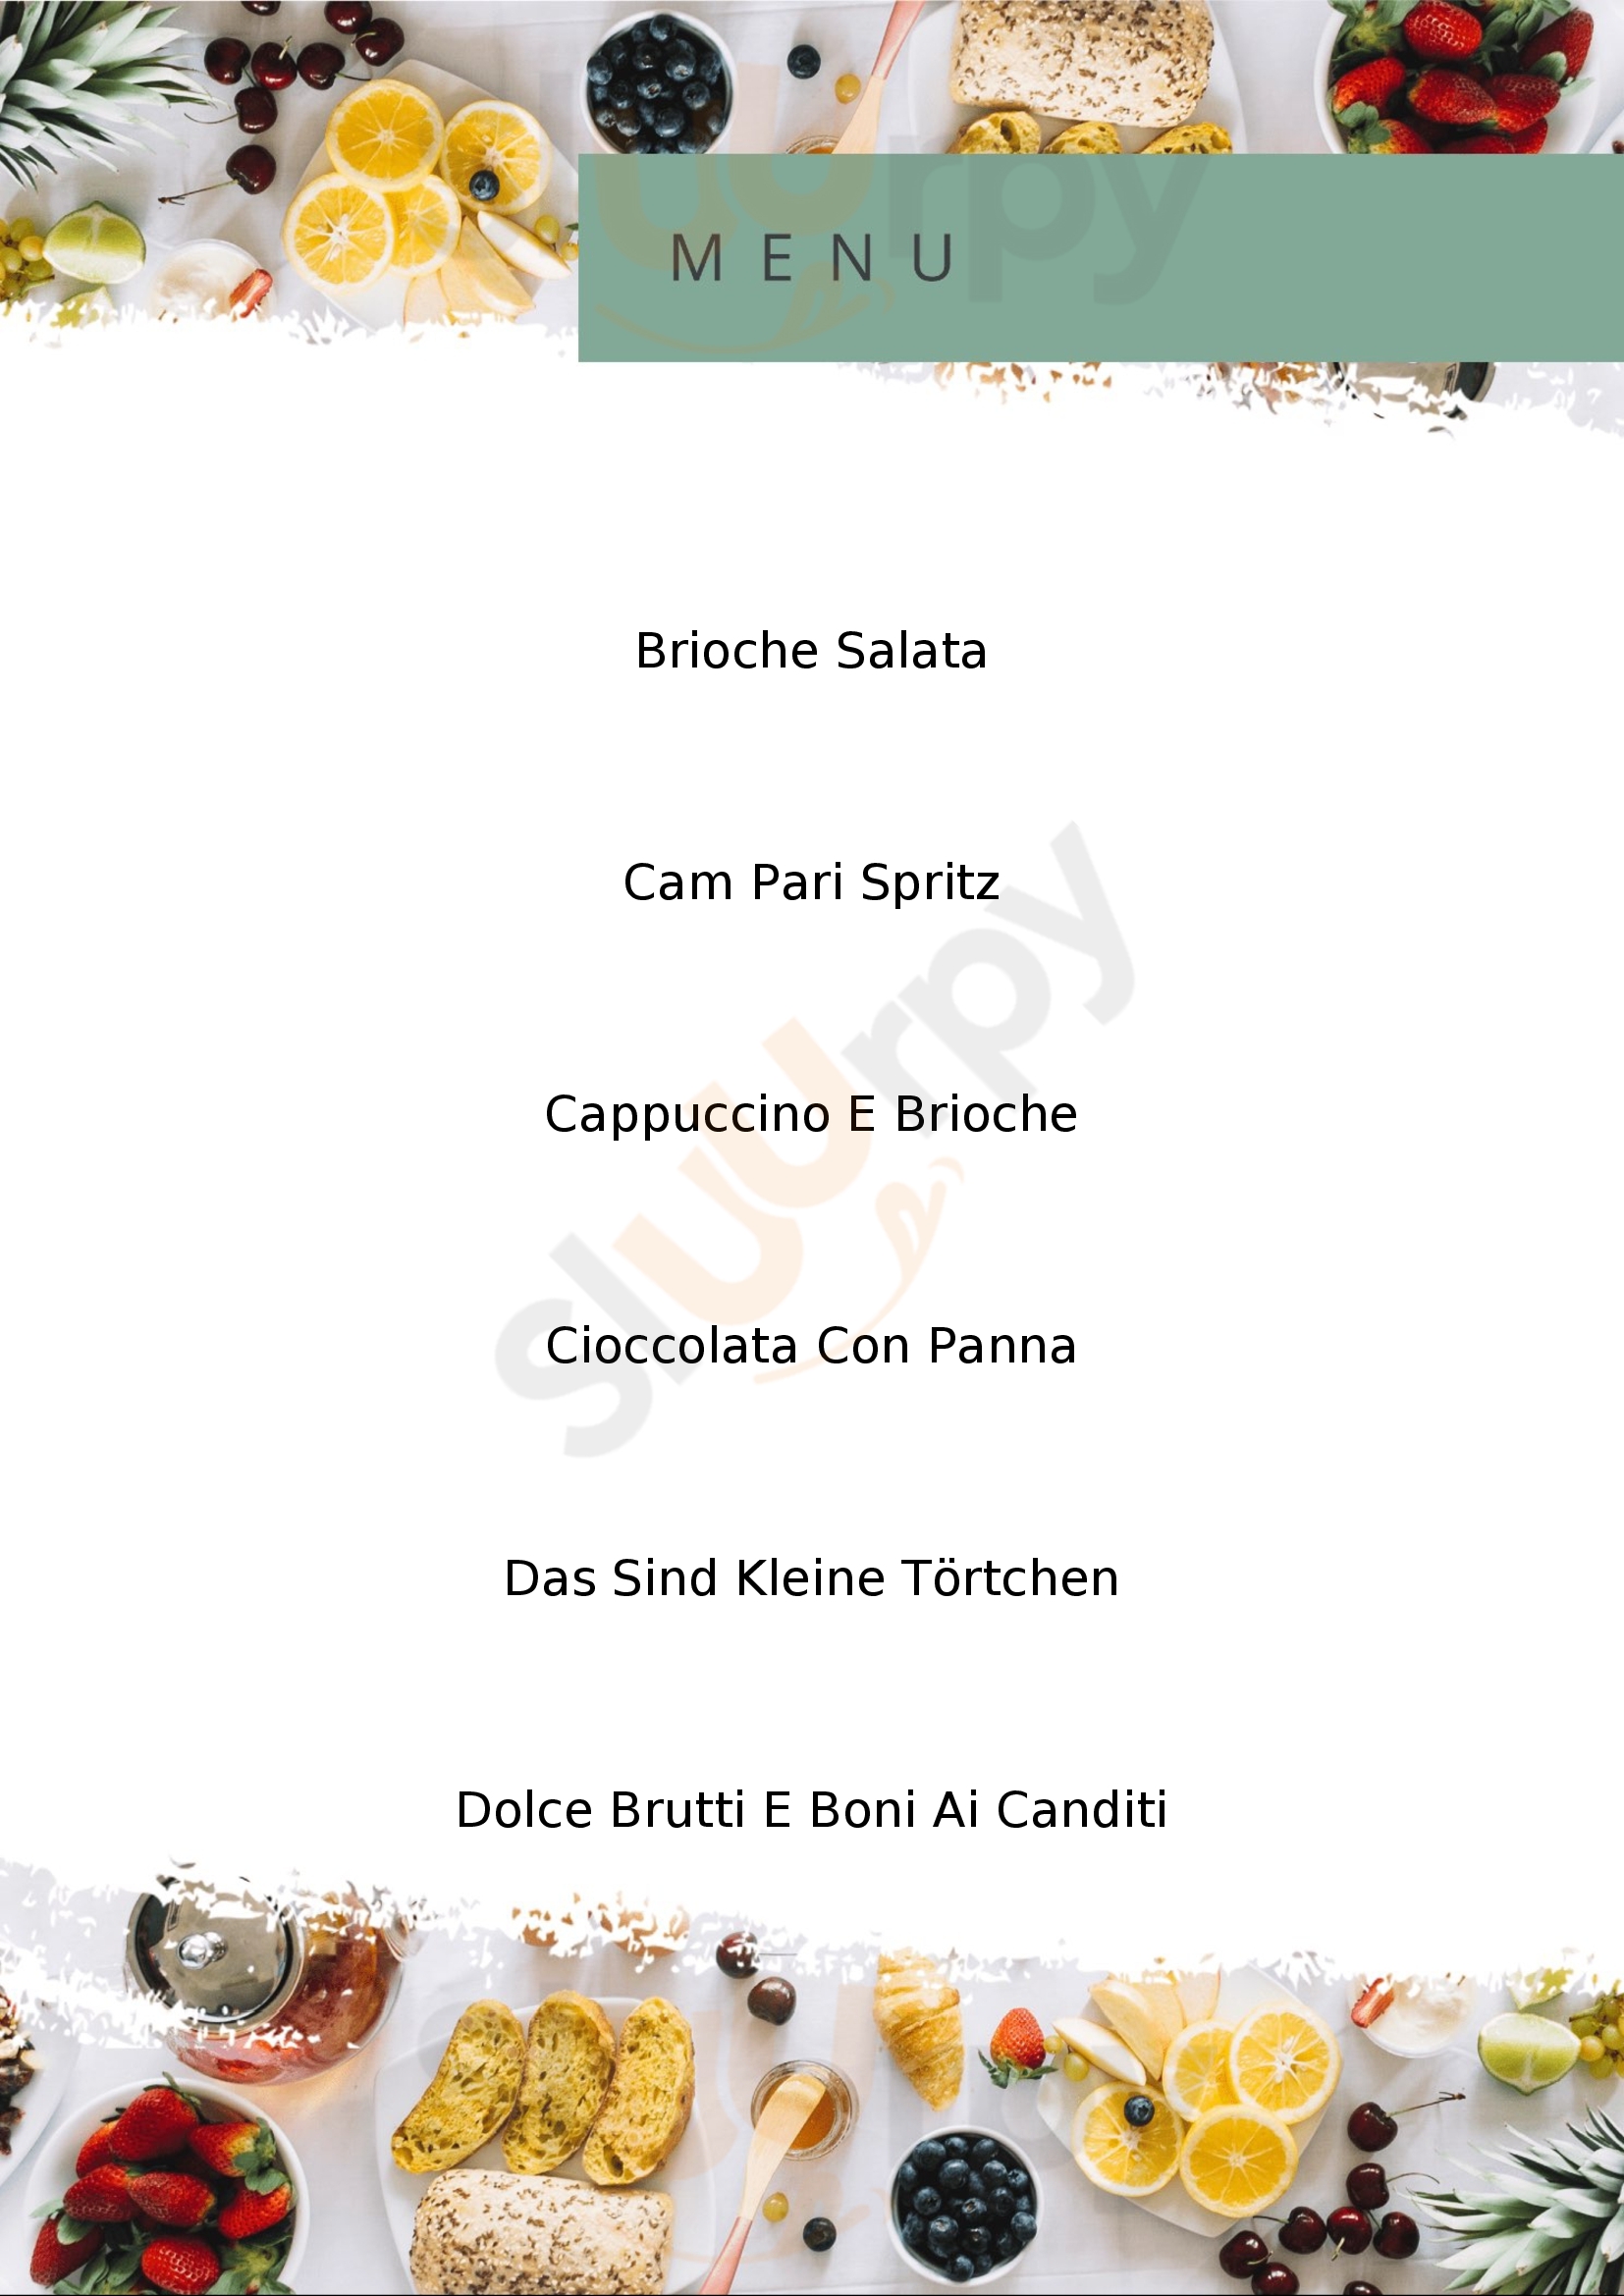 Gemmi Pasticceria - Caffe Storico Sarzana menù 1 pagina